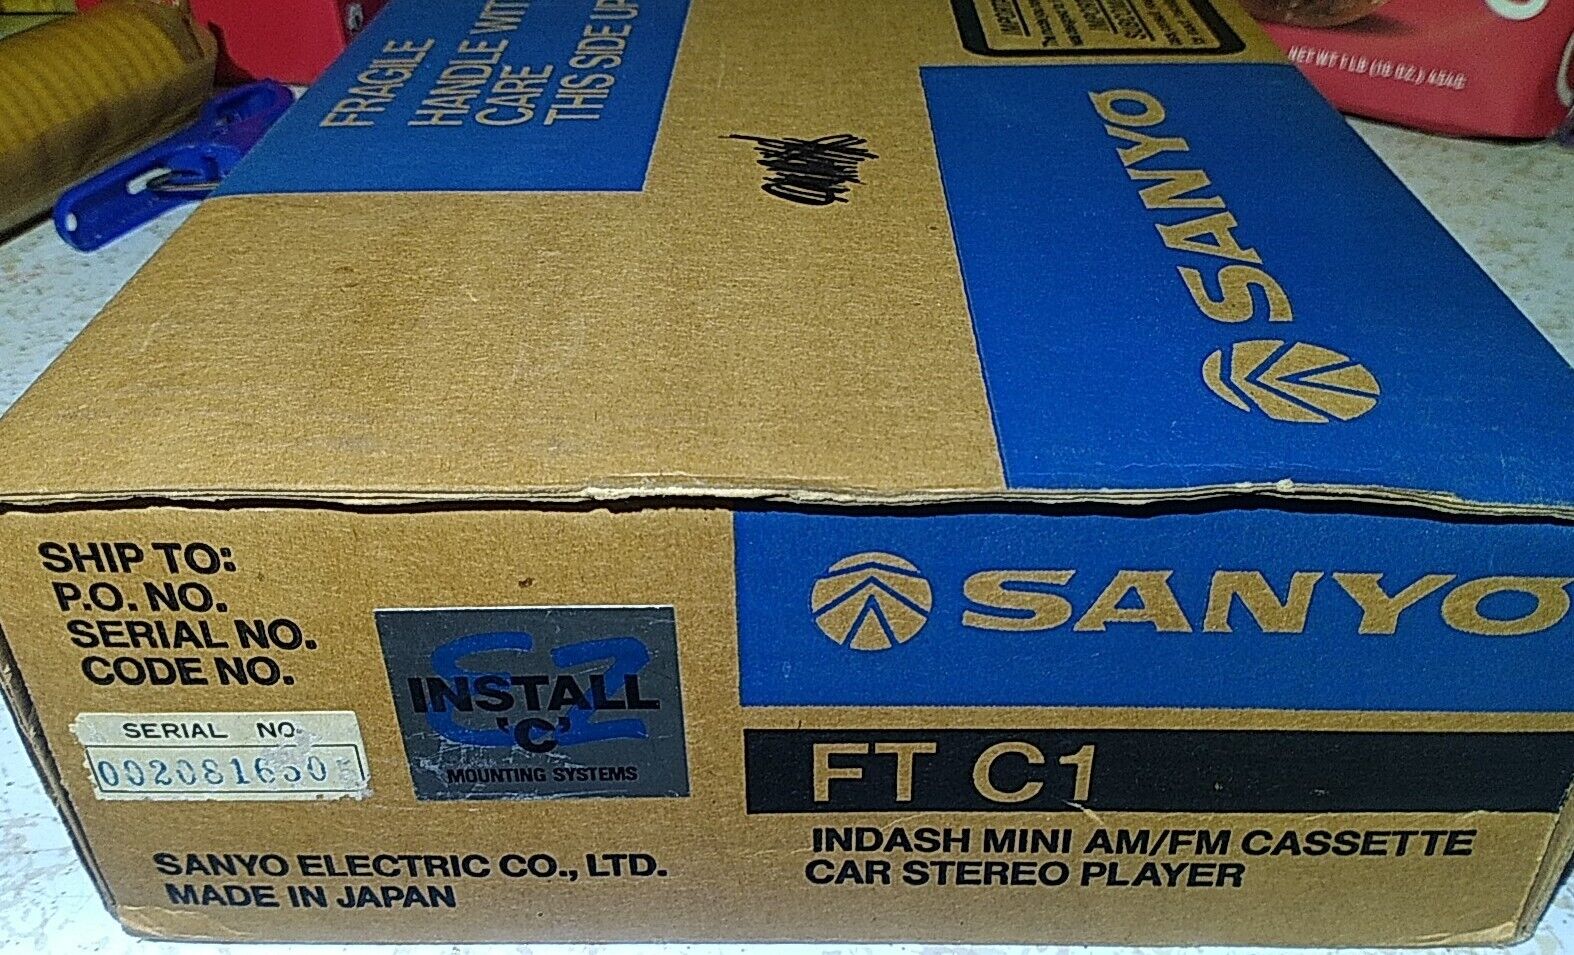 NOS VINTAGE Sanyo FT-C1 Indash Mini AM/FM Cassette Car Stereo Player Japan 1980s